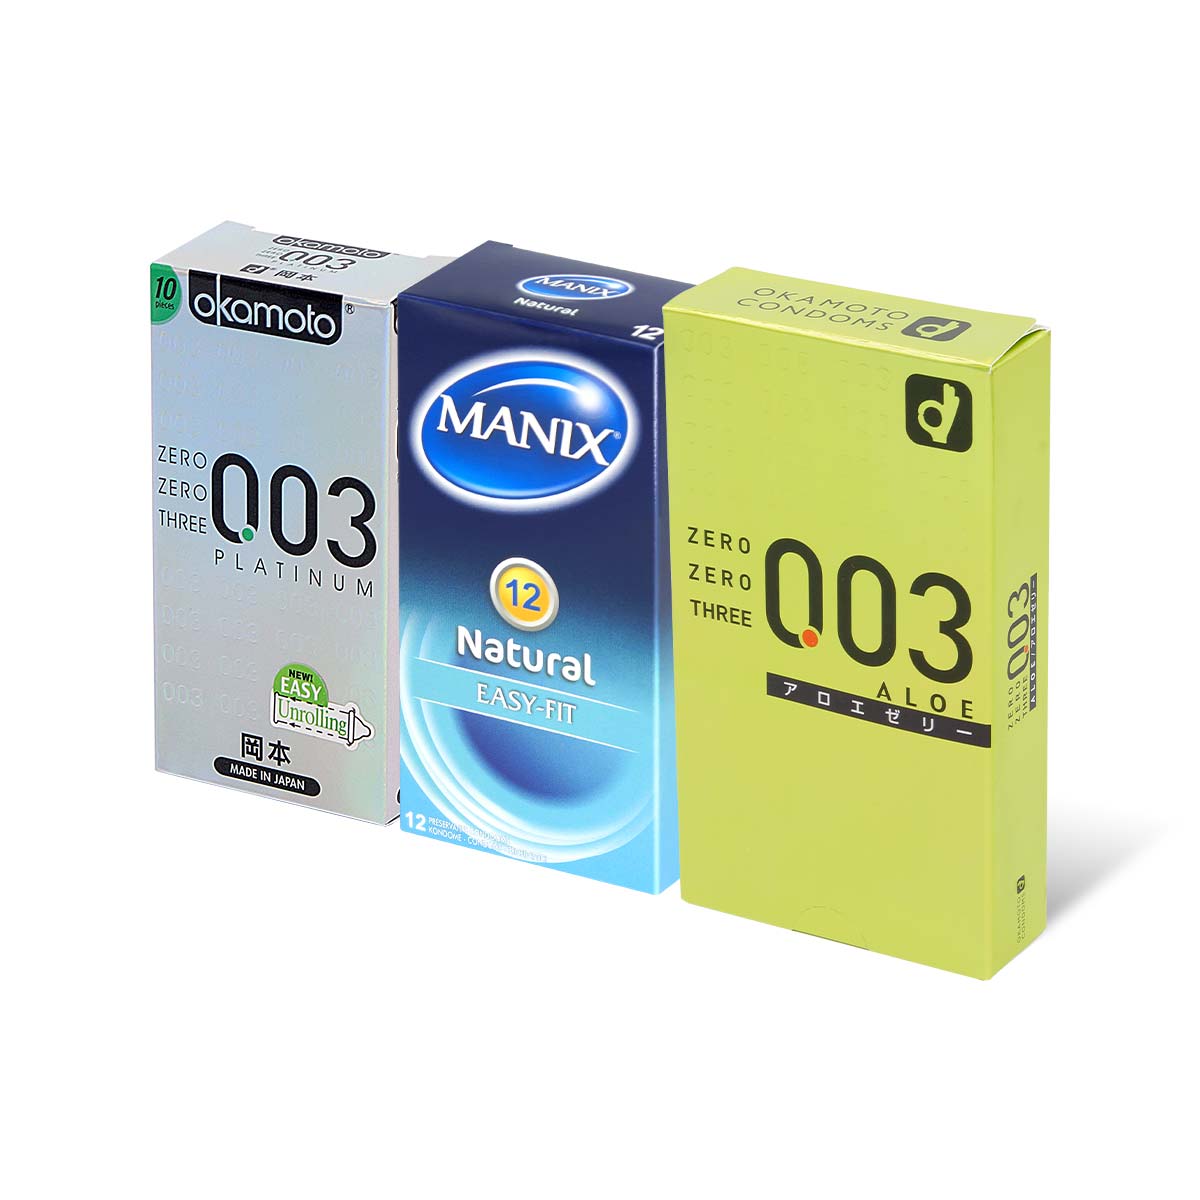 Okamoto 0.03 x Manix Combo Set 32 pieces condom-p_1